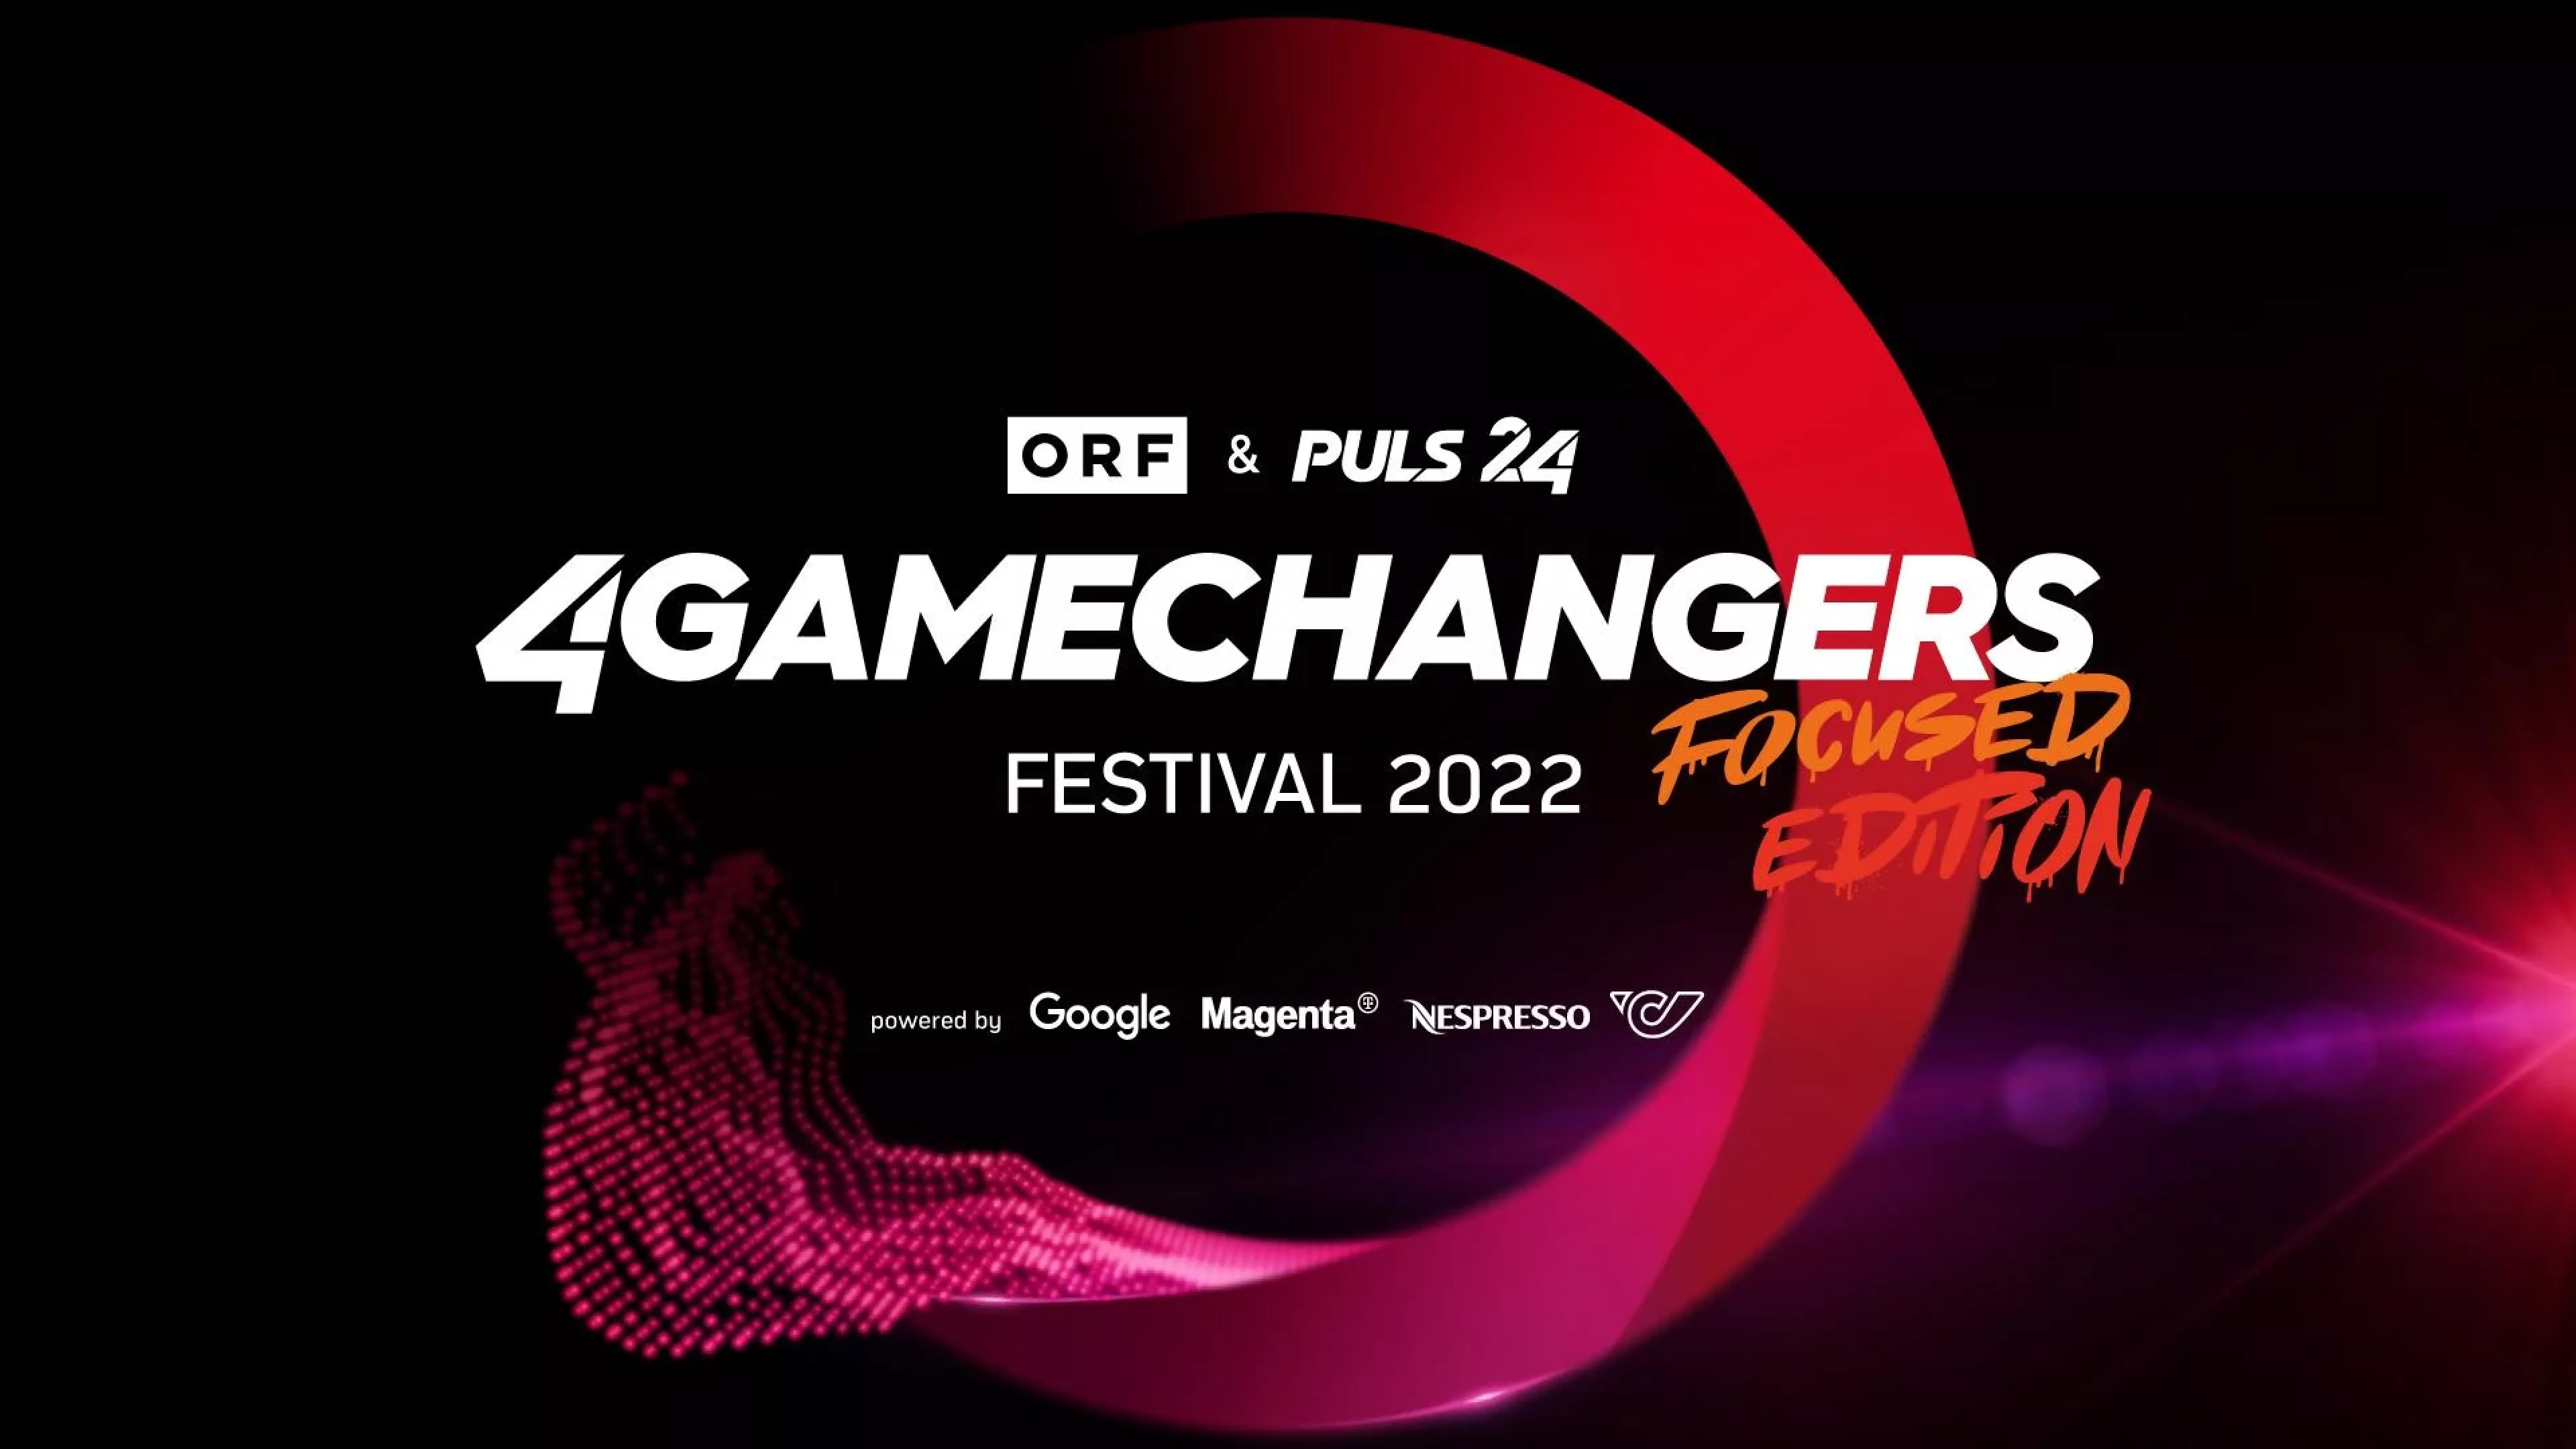 4Gamgechangers Festival 2022